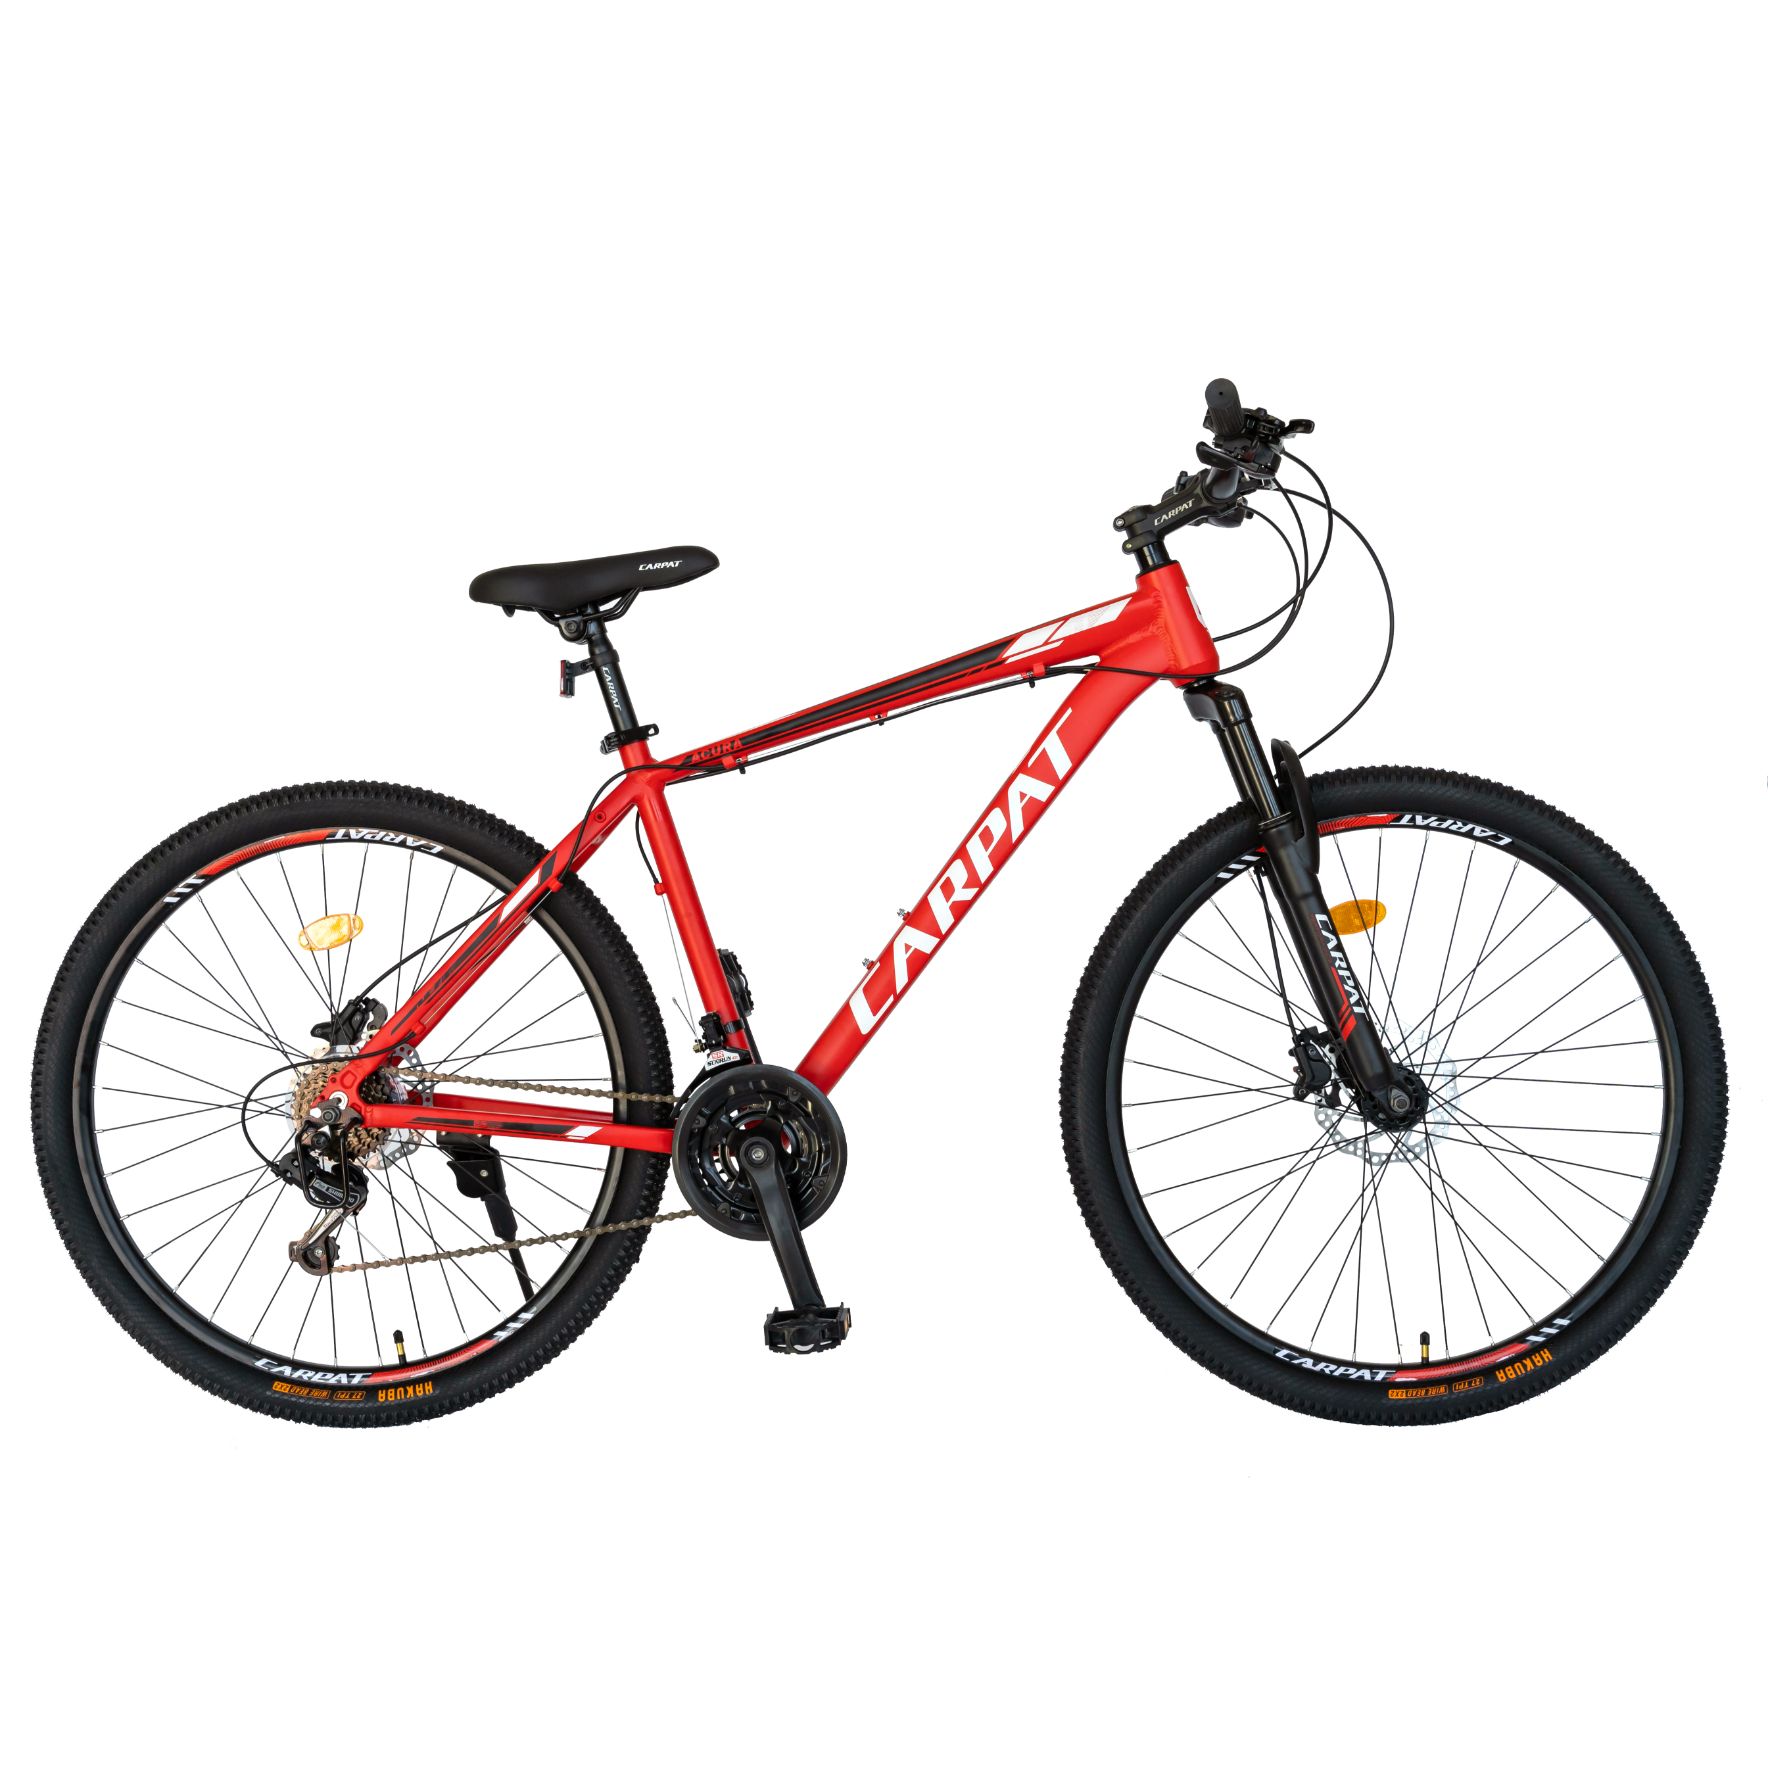 BICICLETE HIDRAULICE - Bicicleta MTB-HT Carpat Acura C2999H 29", Rosu/Negru/Alb, https:carpatsport.ro